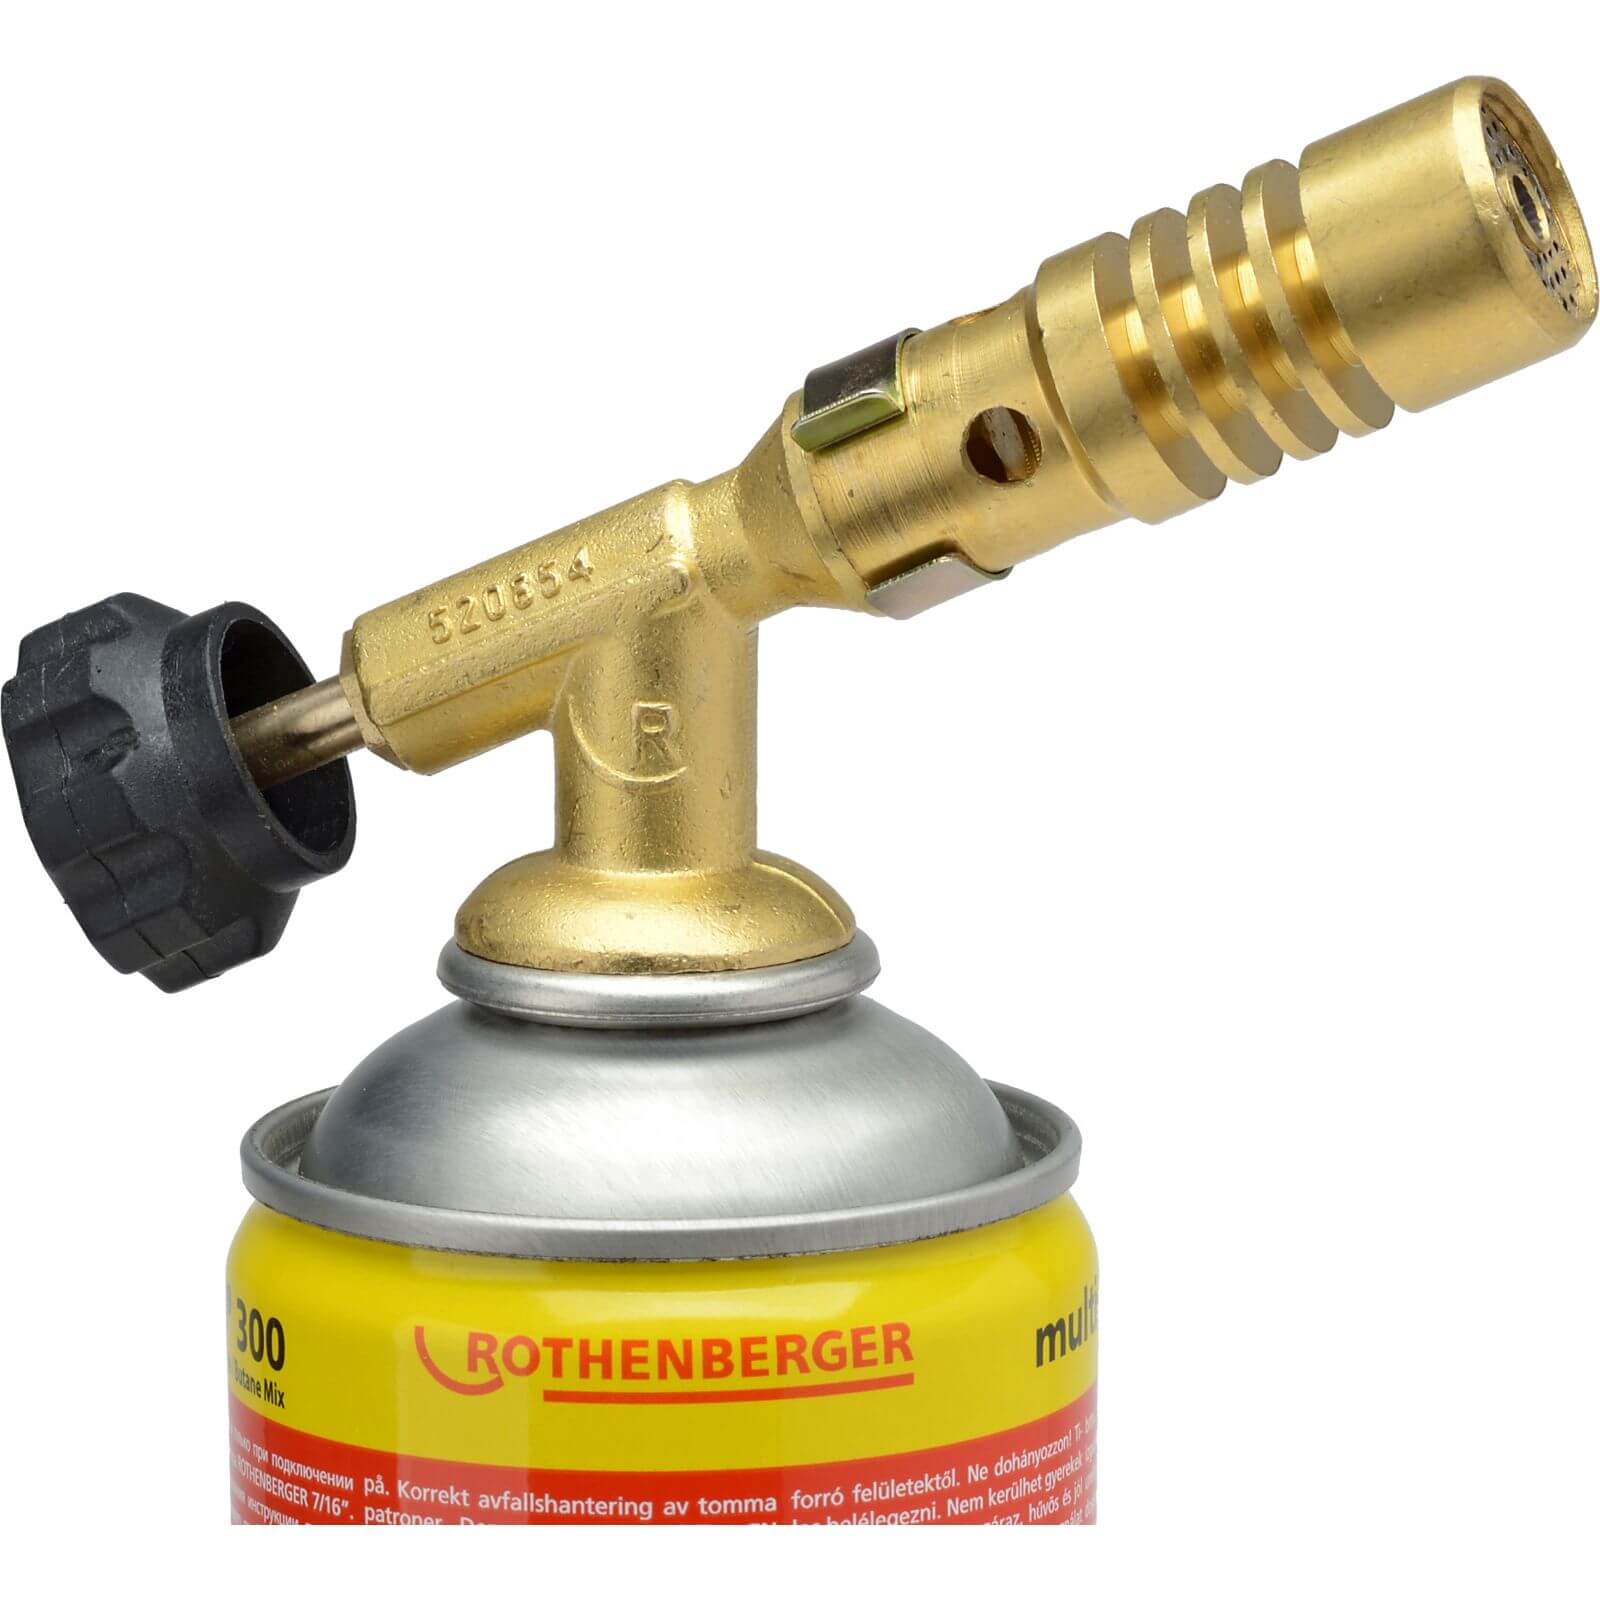 Photo of Rothenberger Rofire Burner Adjustable Gas Torch